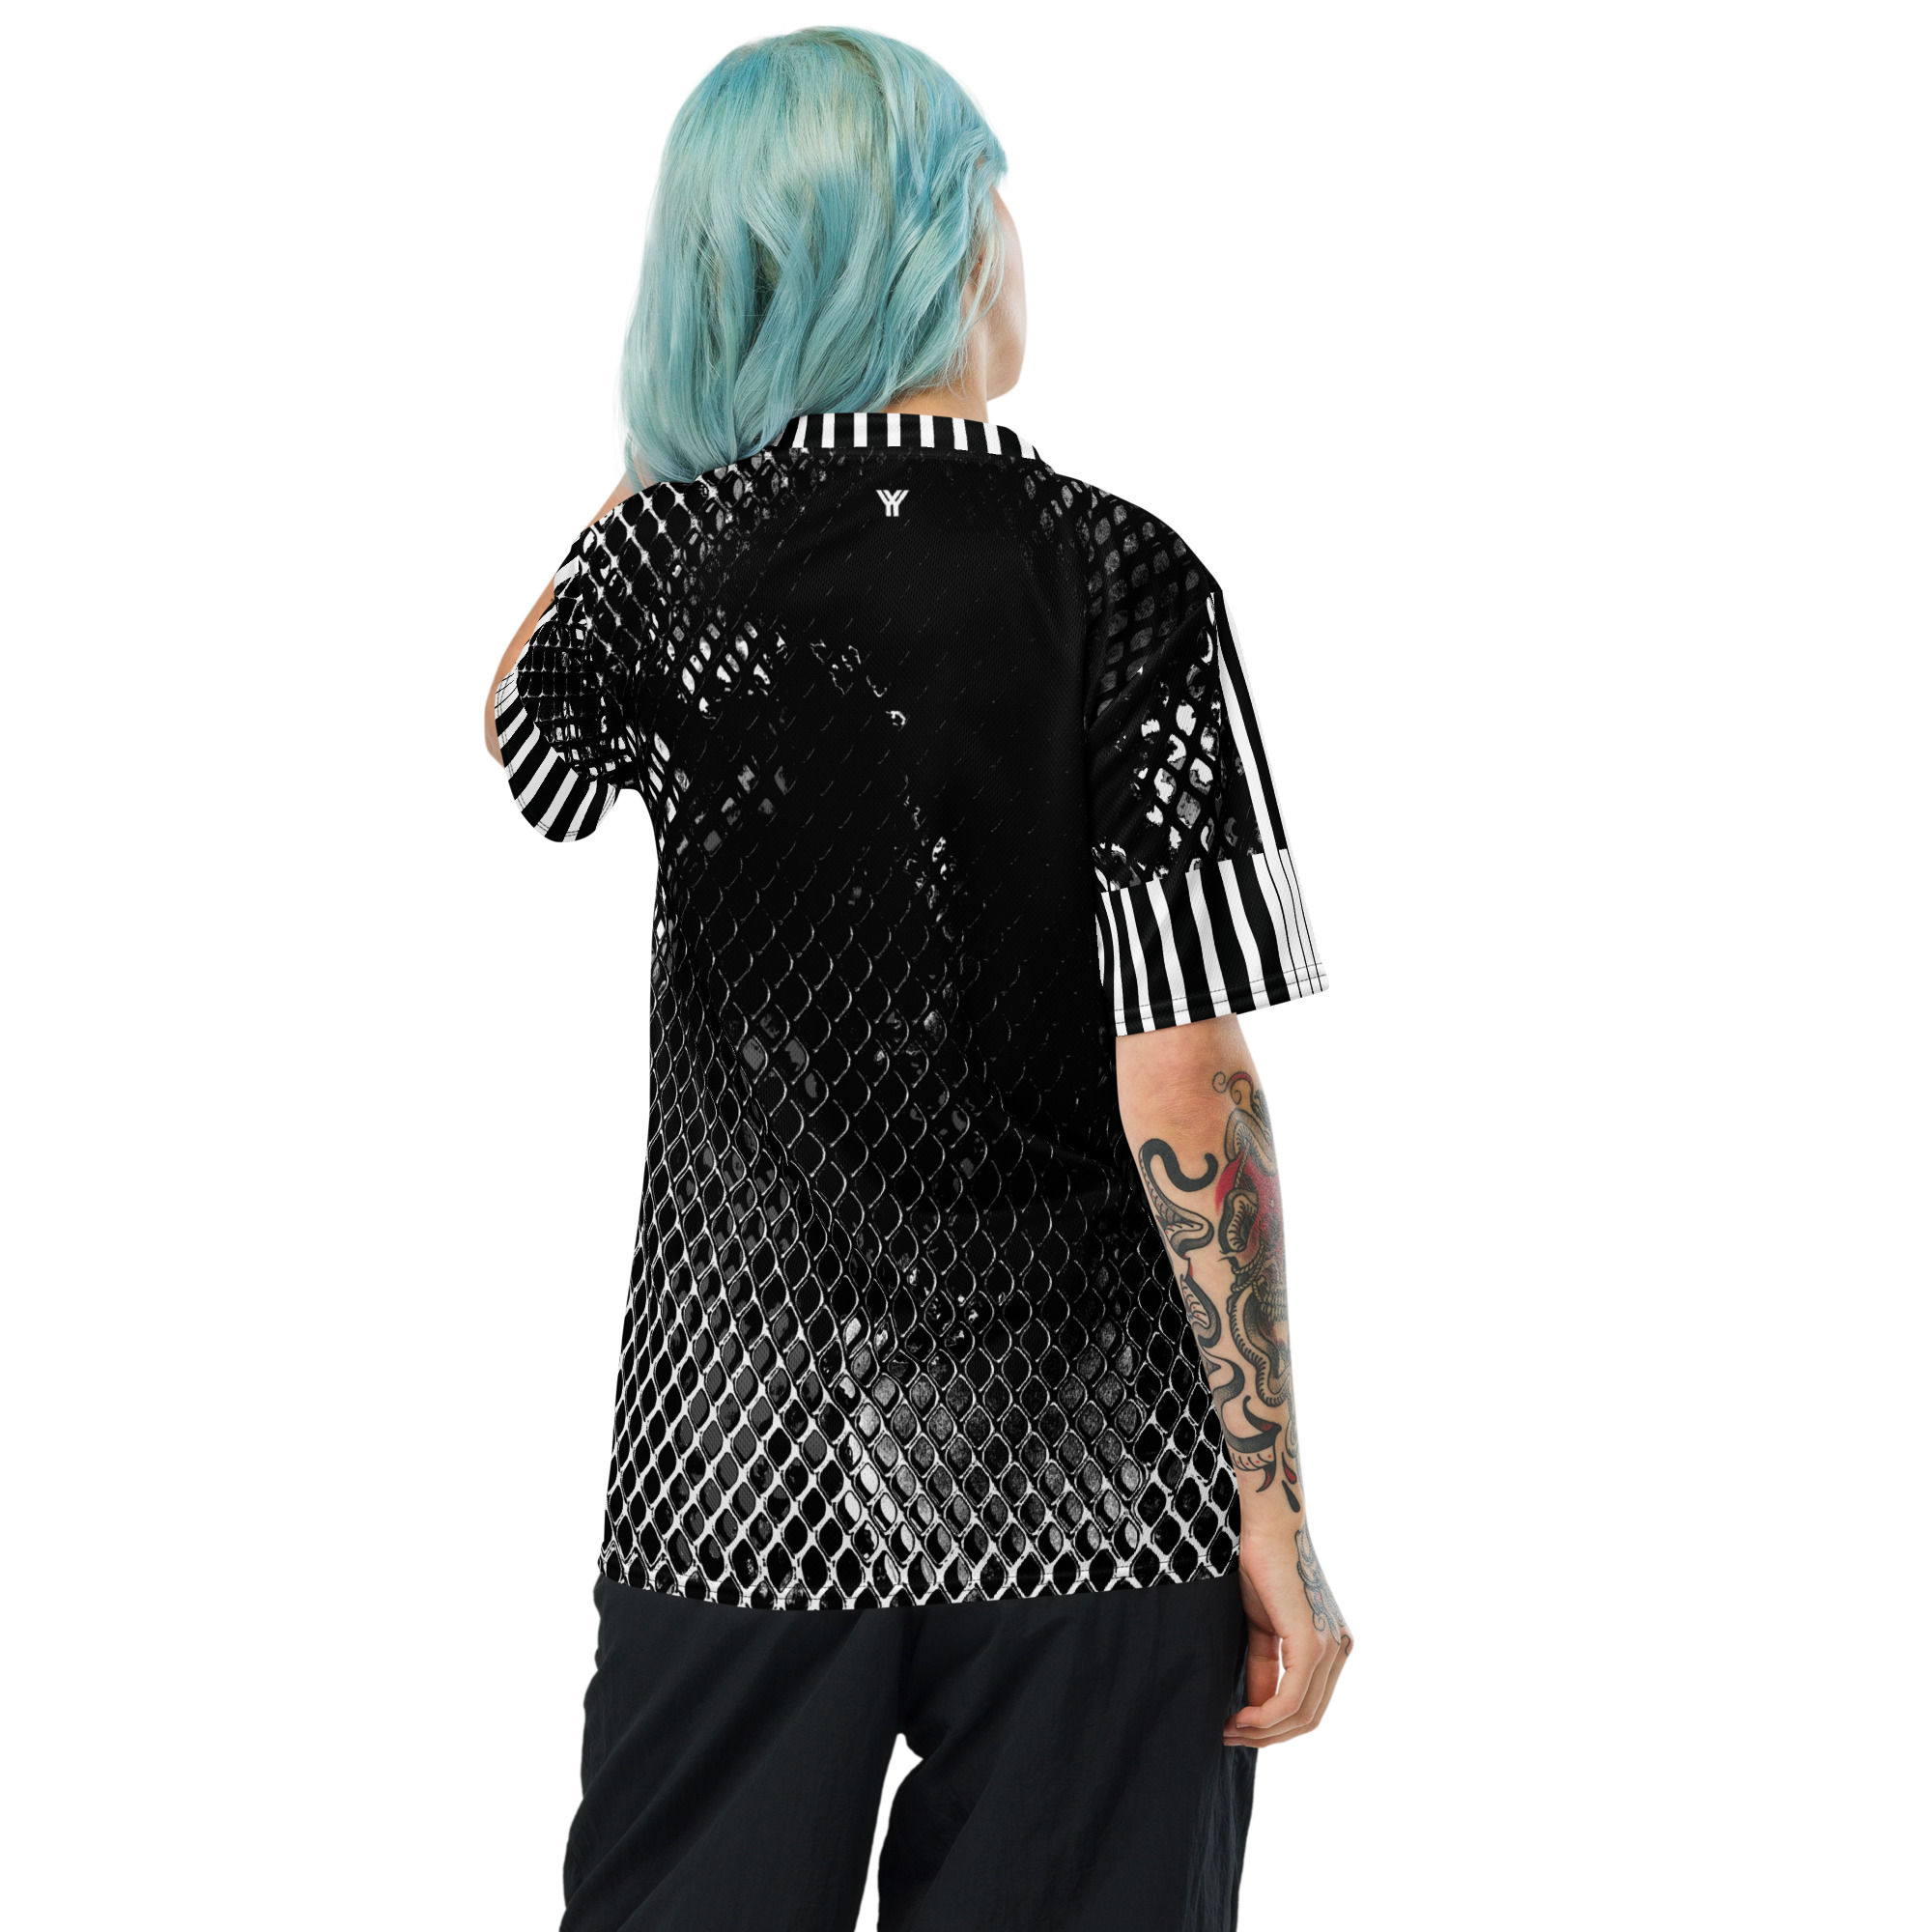 antony yorck online boutique athleisure mesh print style